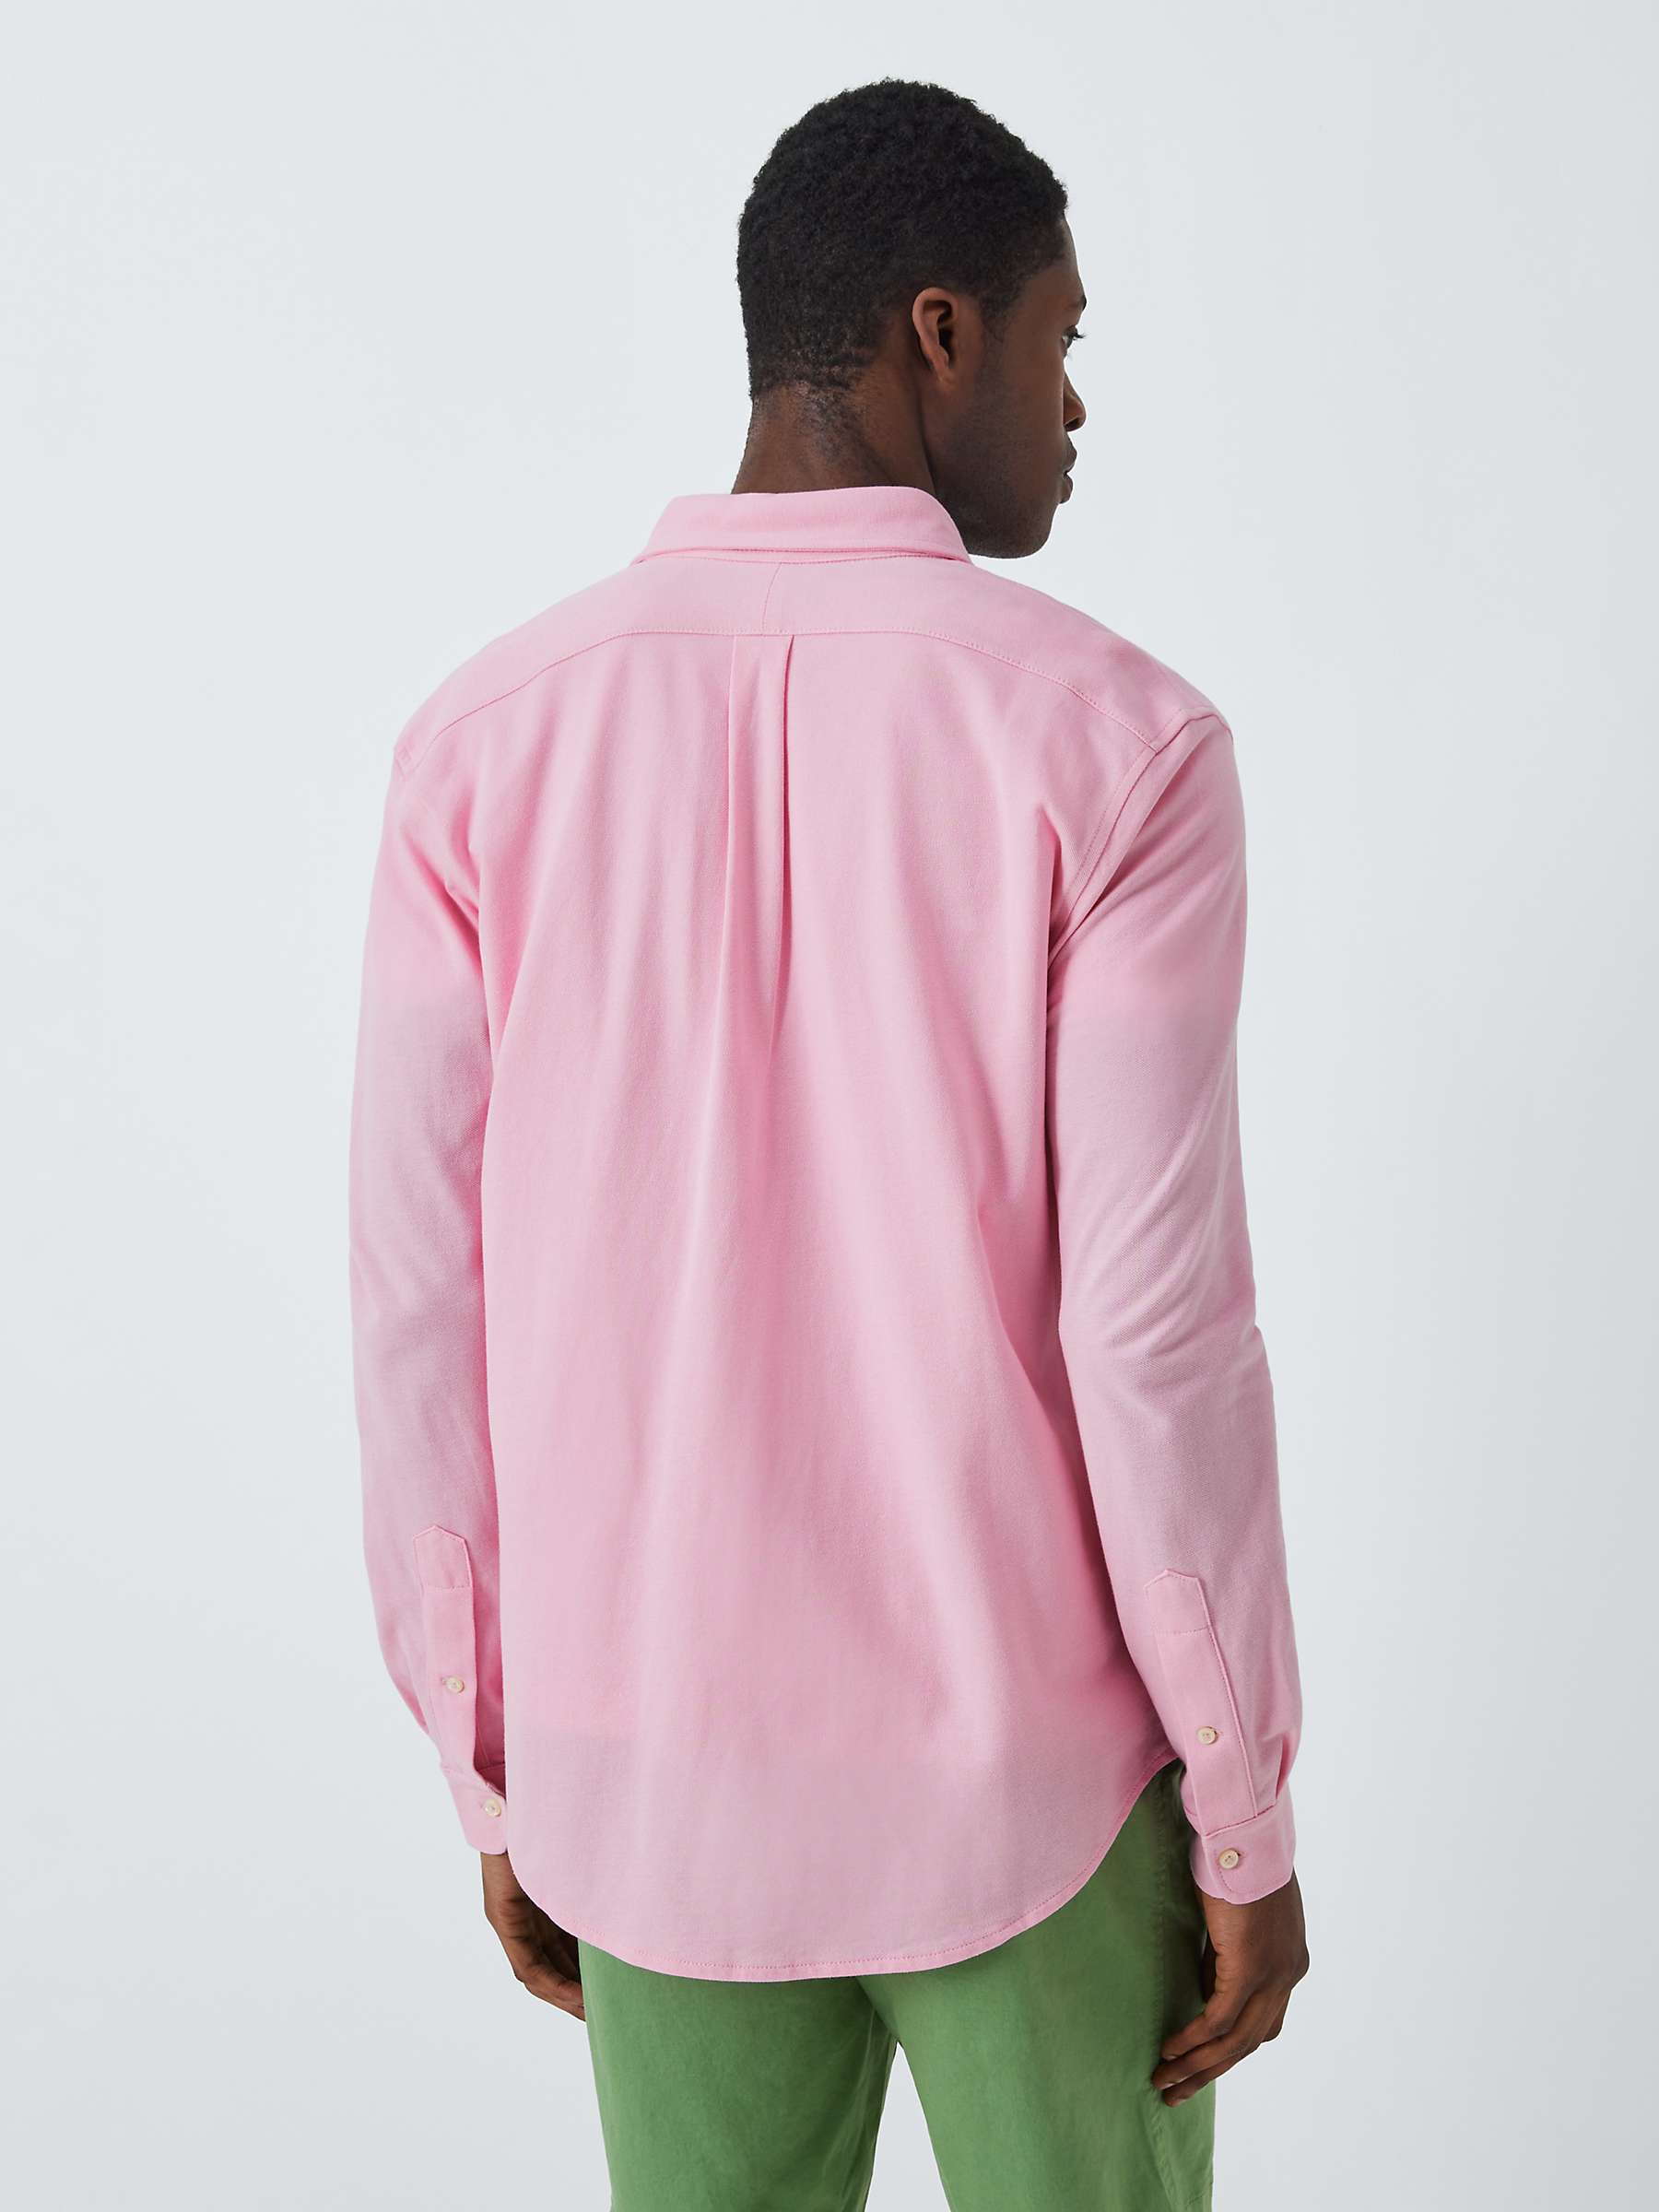 Buy Polo Ralph Lauren Mesh Long Sleeve Shirt Online at johnlewis.com